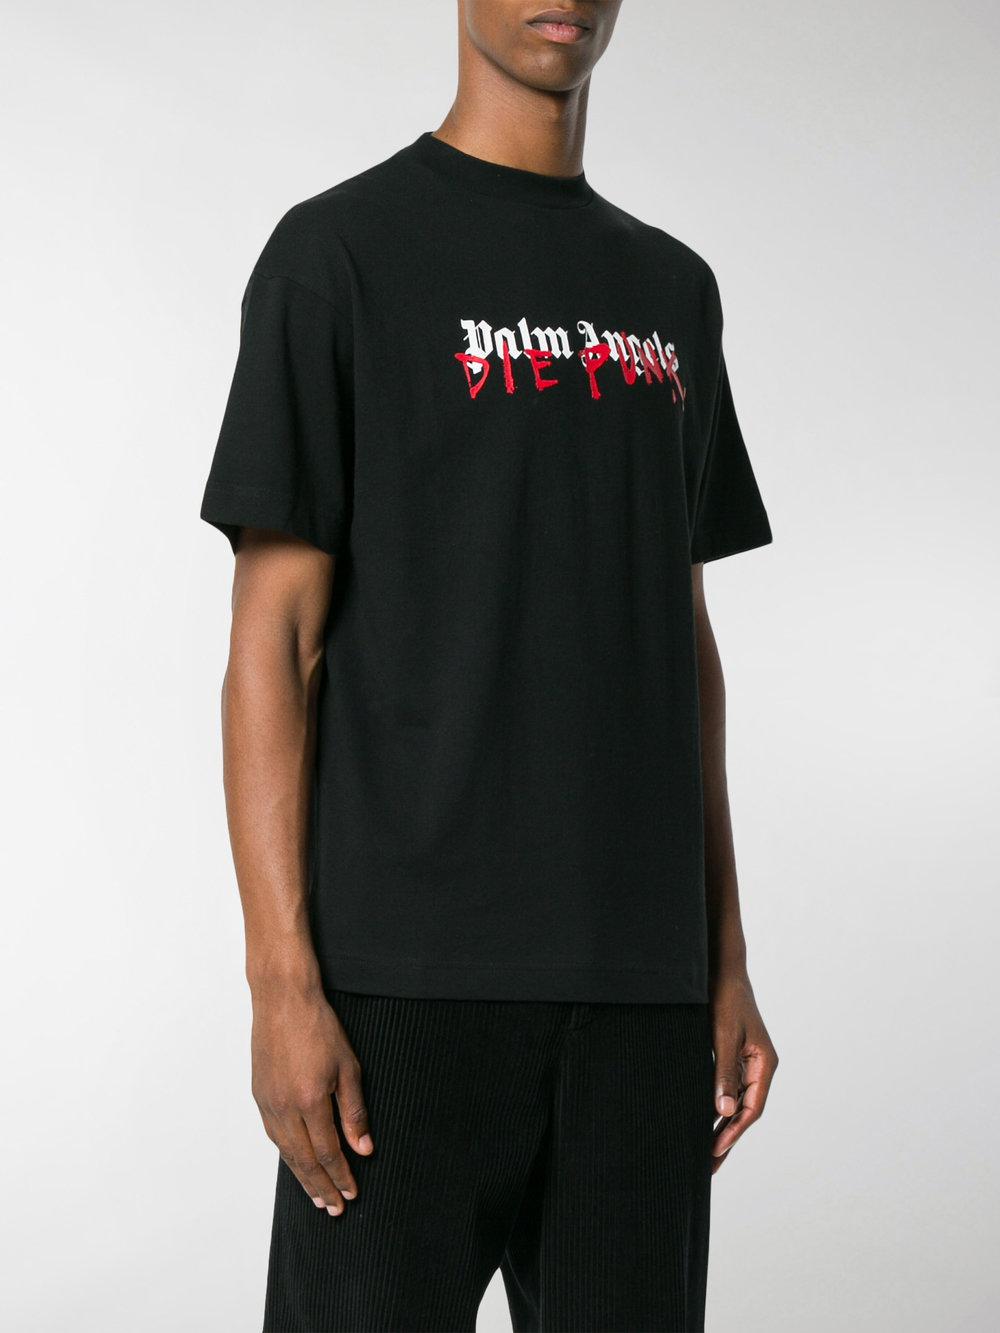 Palm Angels X Playboi Carti Printed Logo T-shirt in Black for Men - Lyst